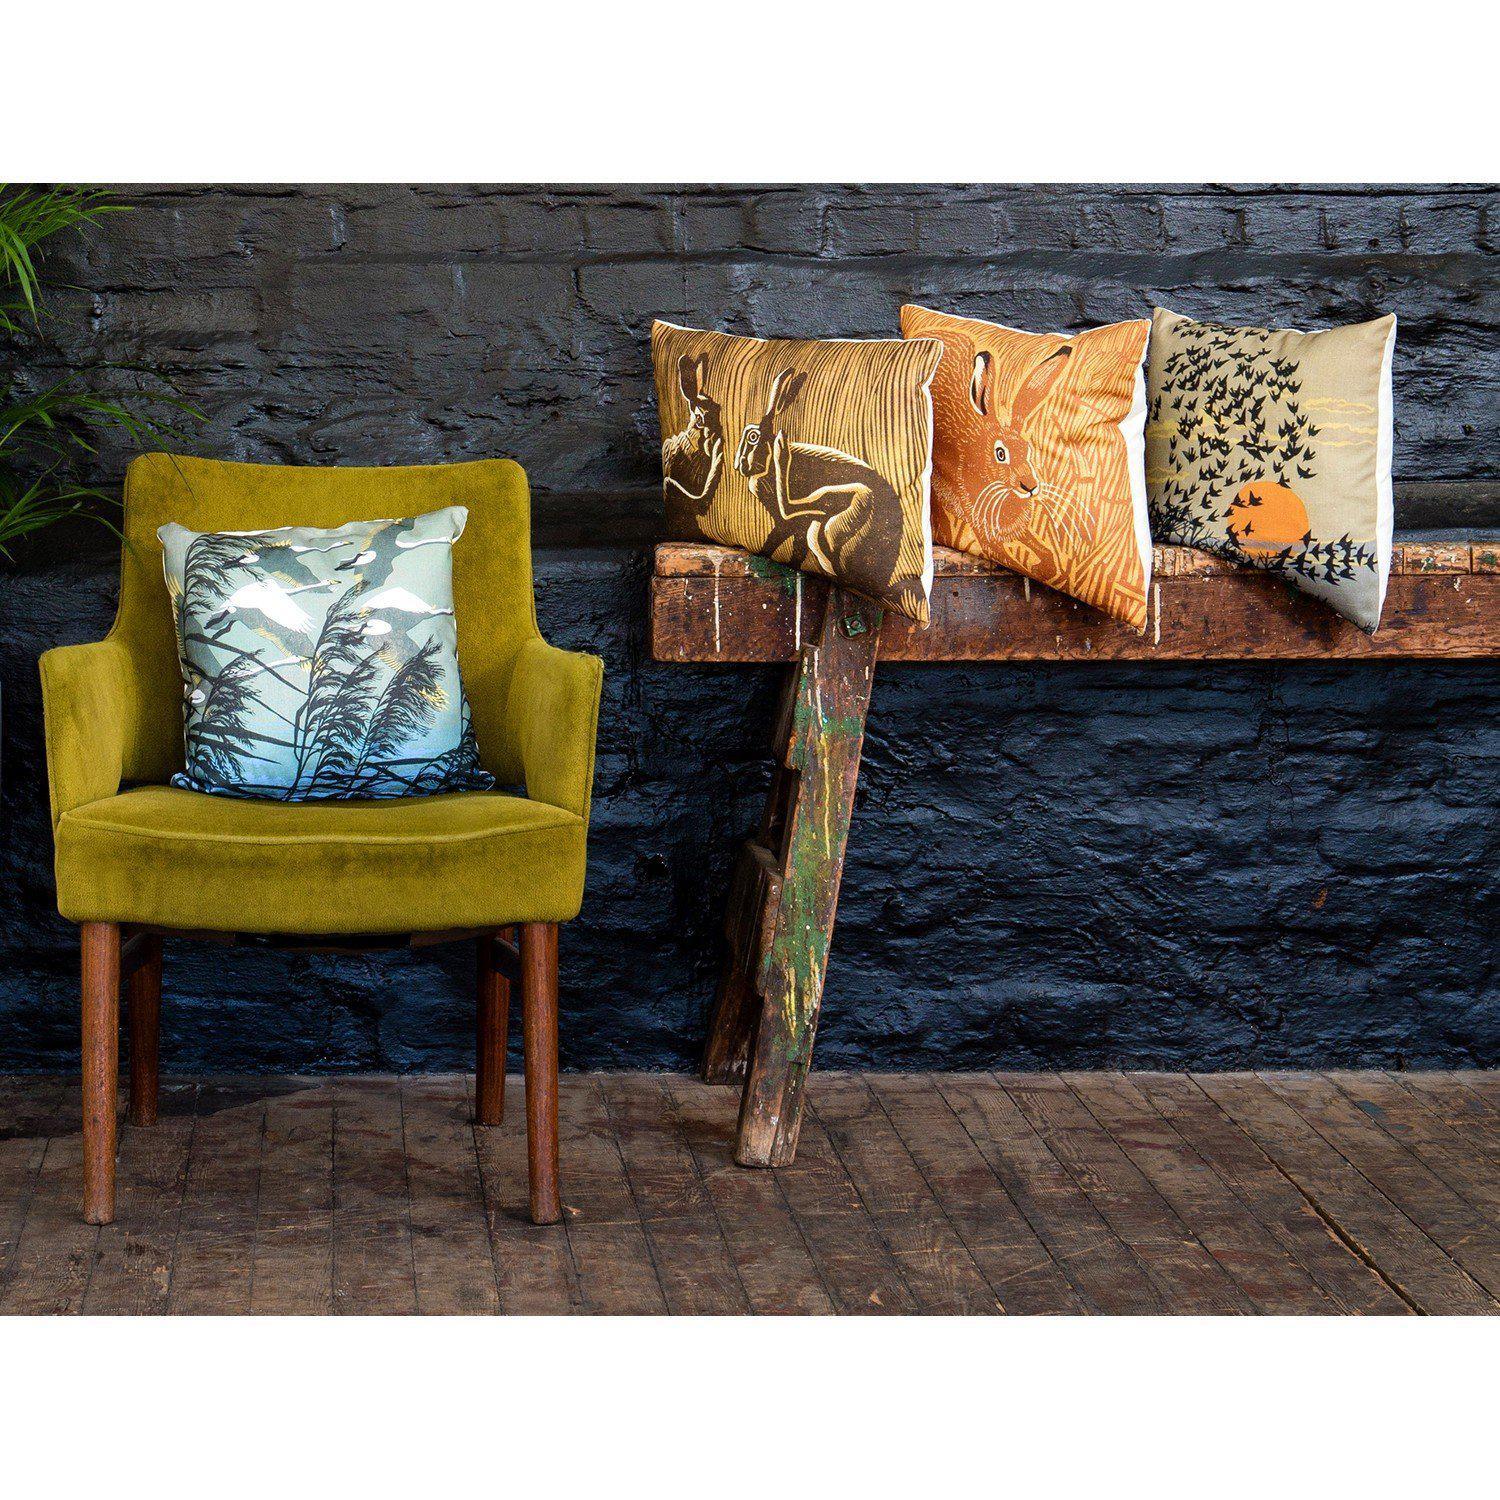 Bumble Bees - Robert Gillmor Cushion - Handmade Cushions UK - WeLoveCushions